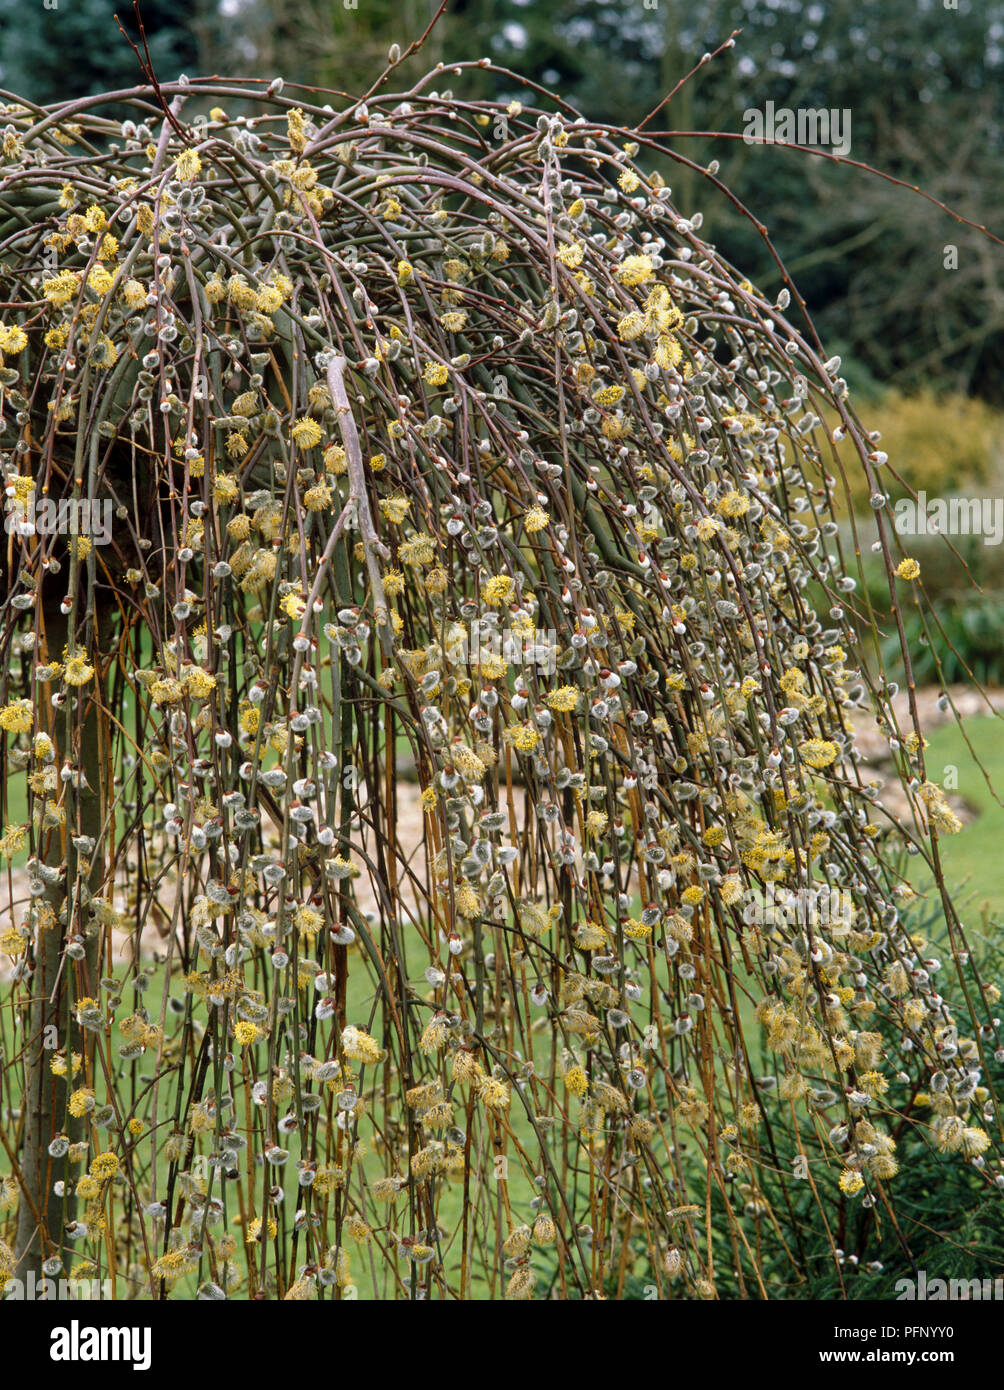 Salix Caprea 'Kilmarnock', Kilmarnock Willow, weeping shrub showing yellow, furry flowers. Stock Photo